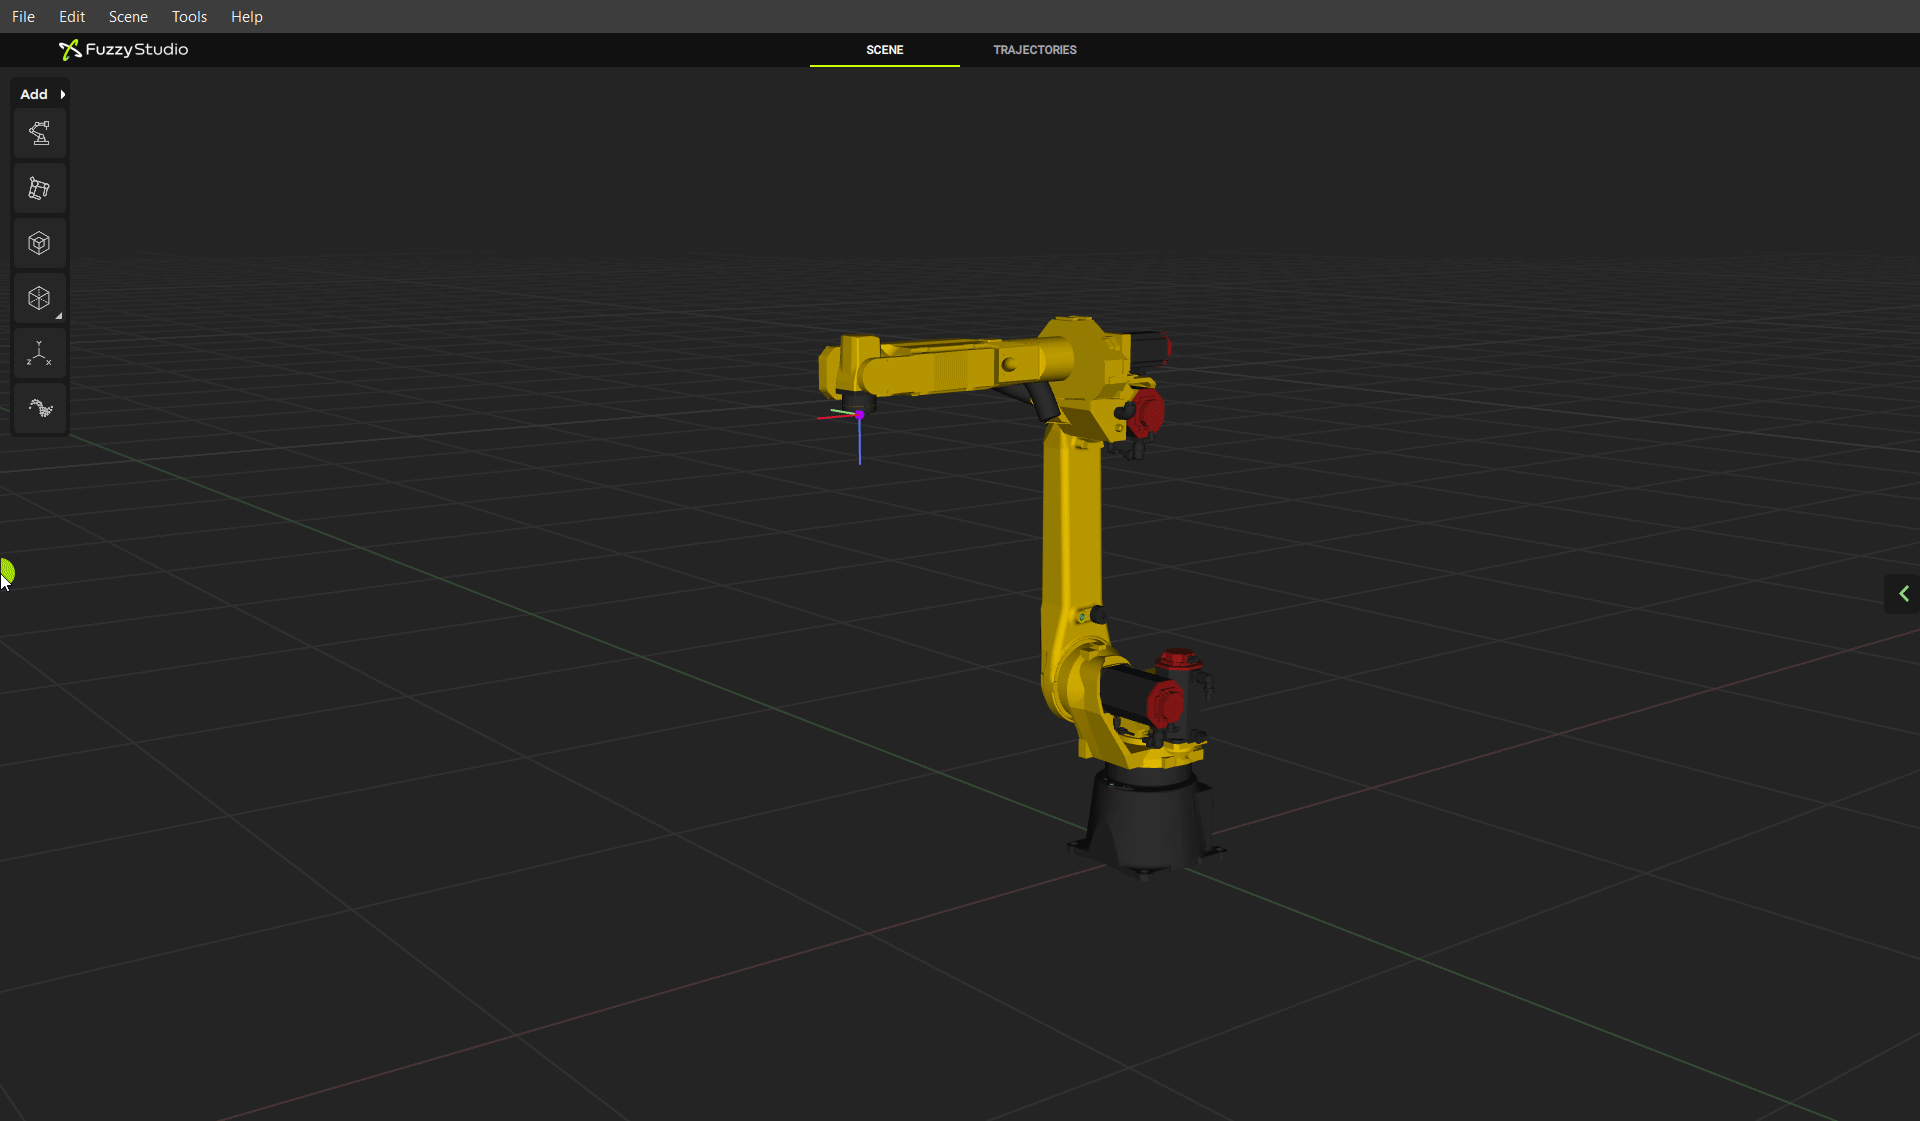 Adding a new custom robot tool to Fuzzy Studio.